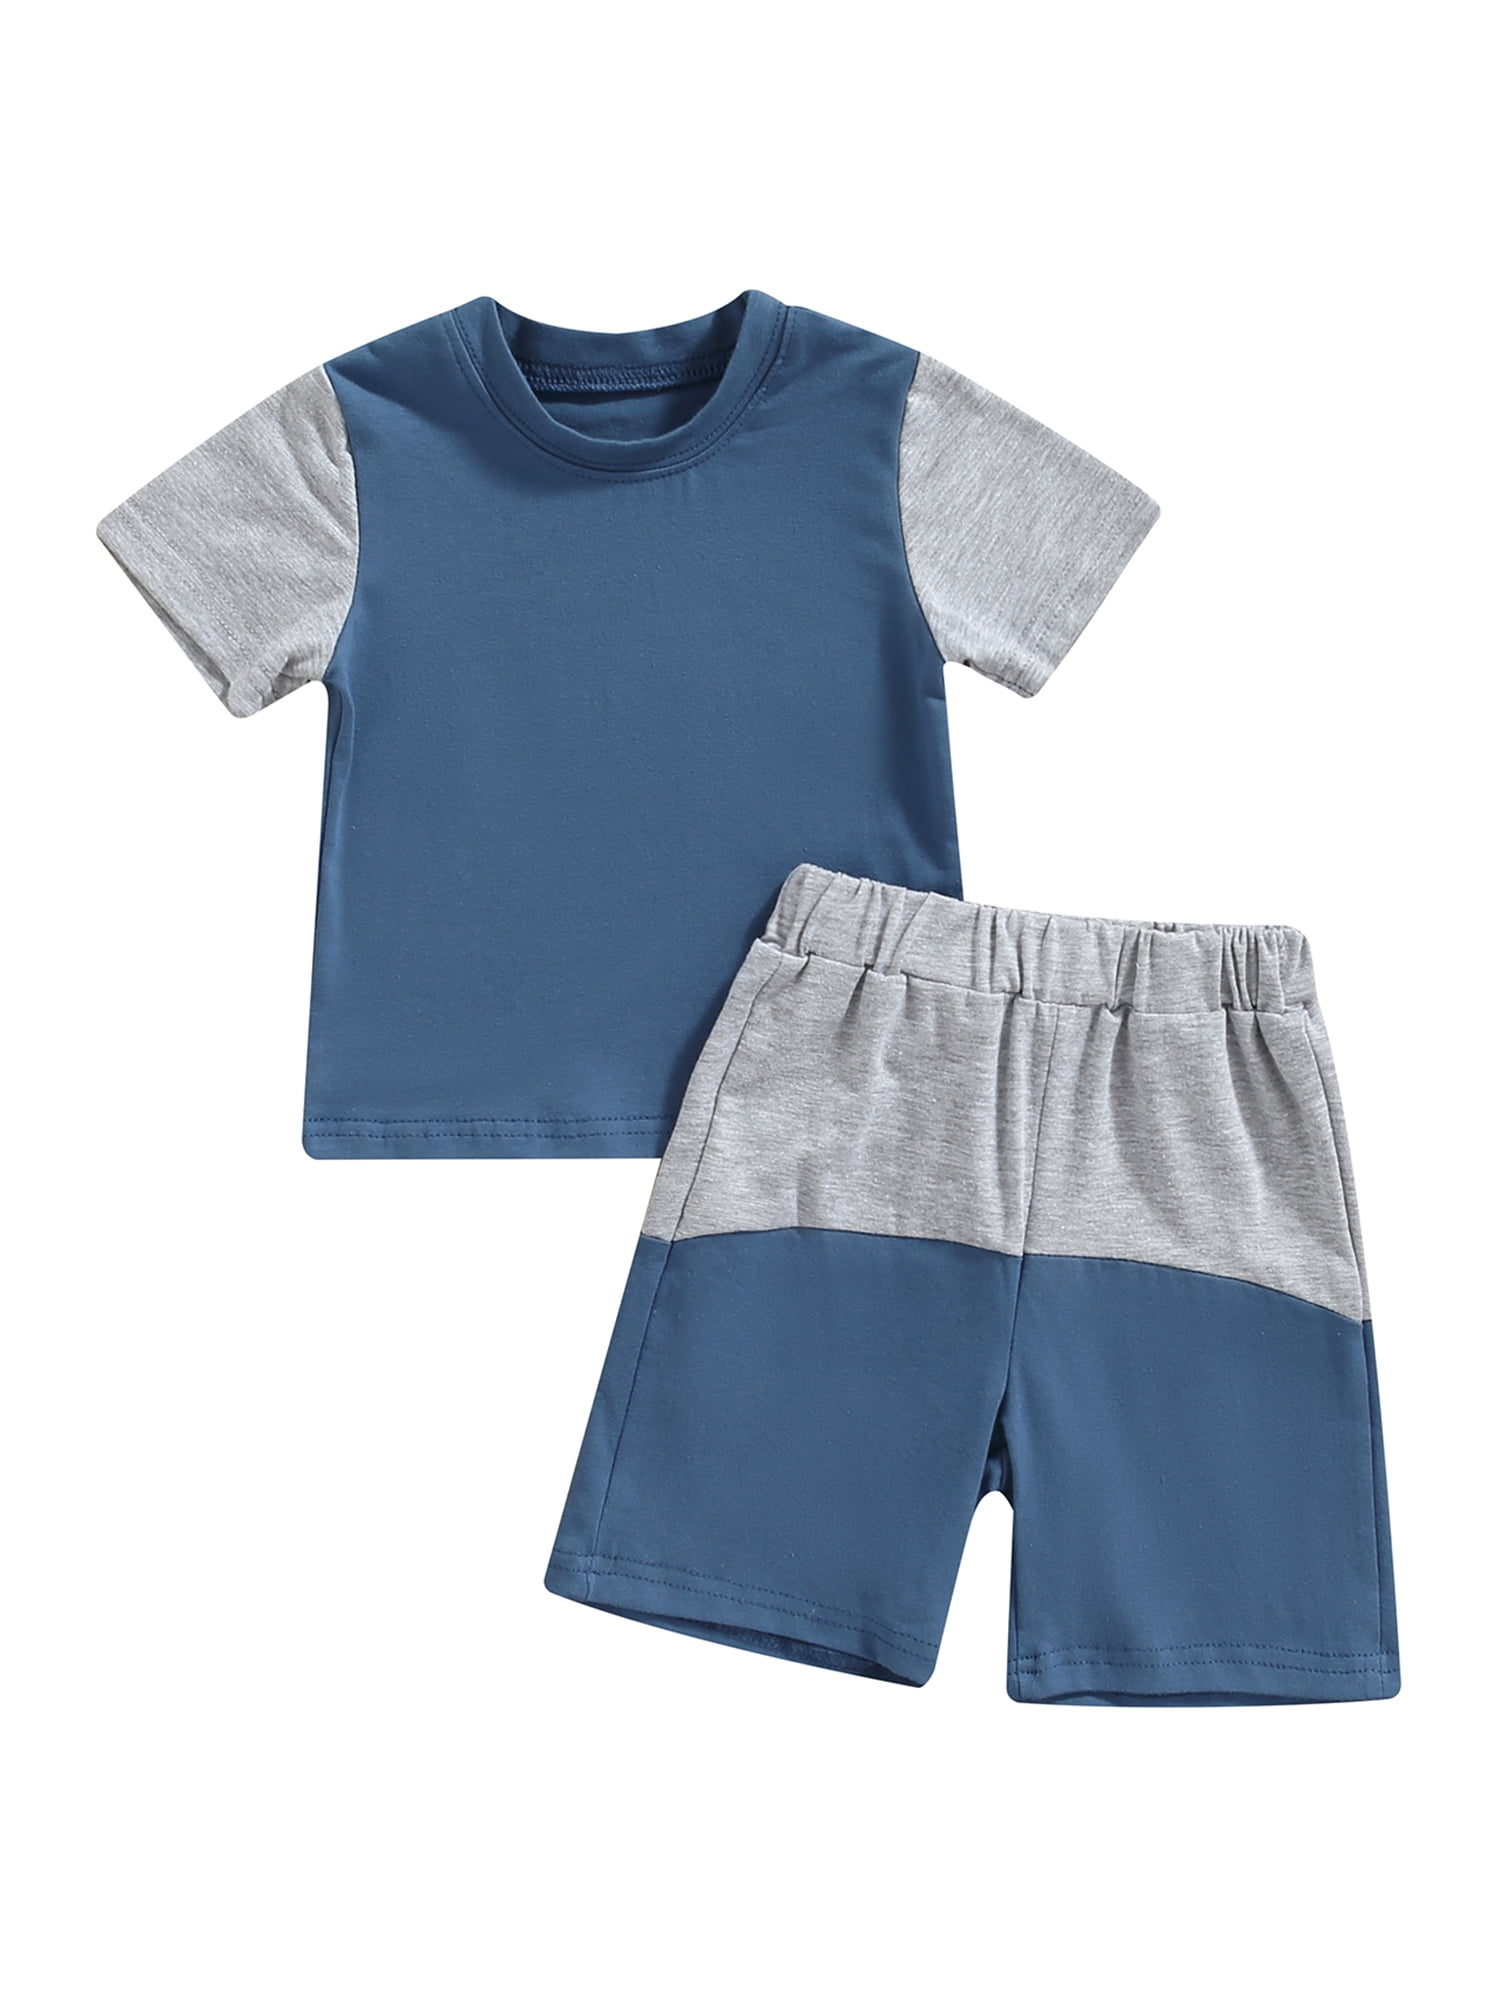 Mothercare Mothercare unisex boys shorts age 3-4 100% cotton blue 